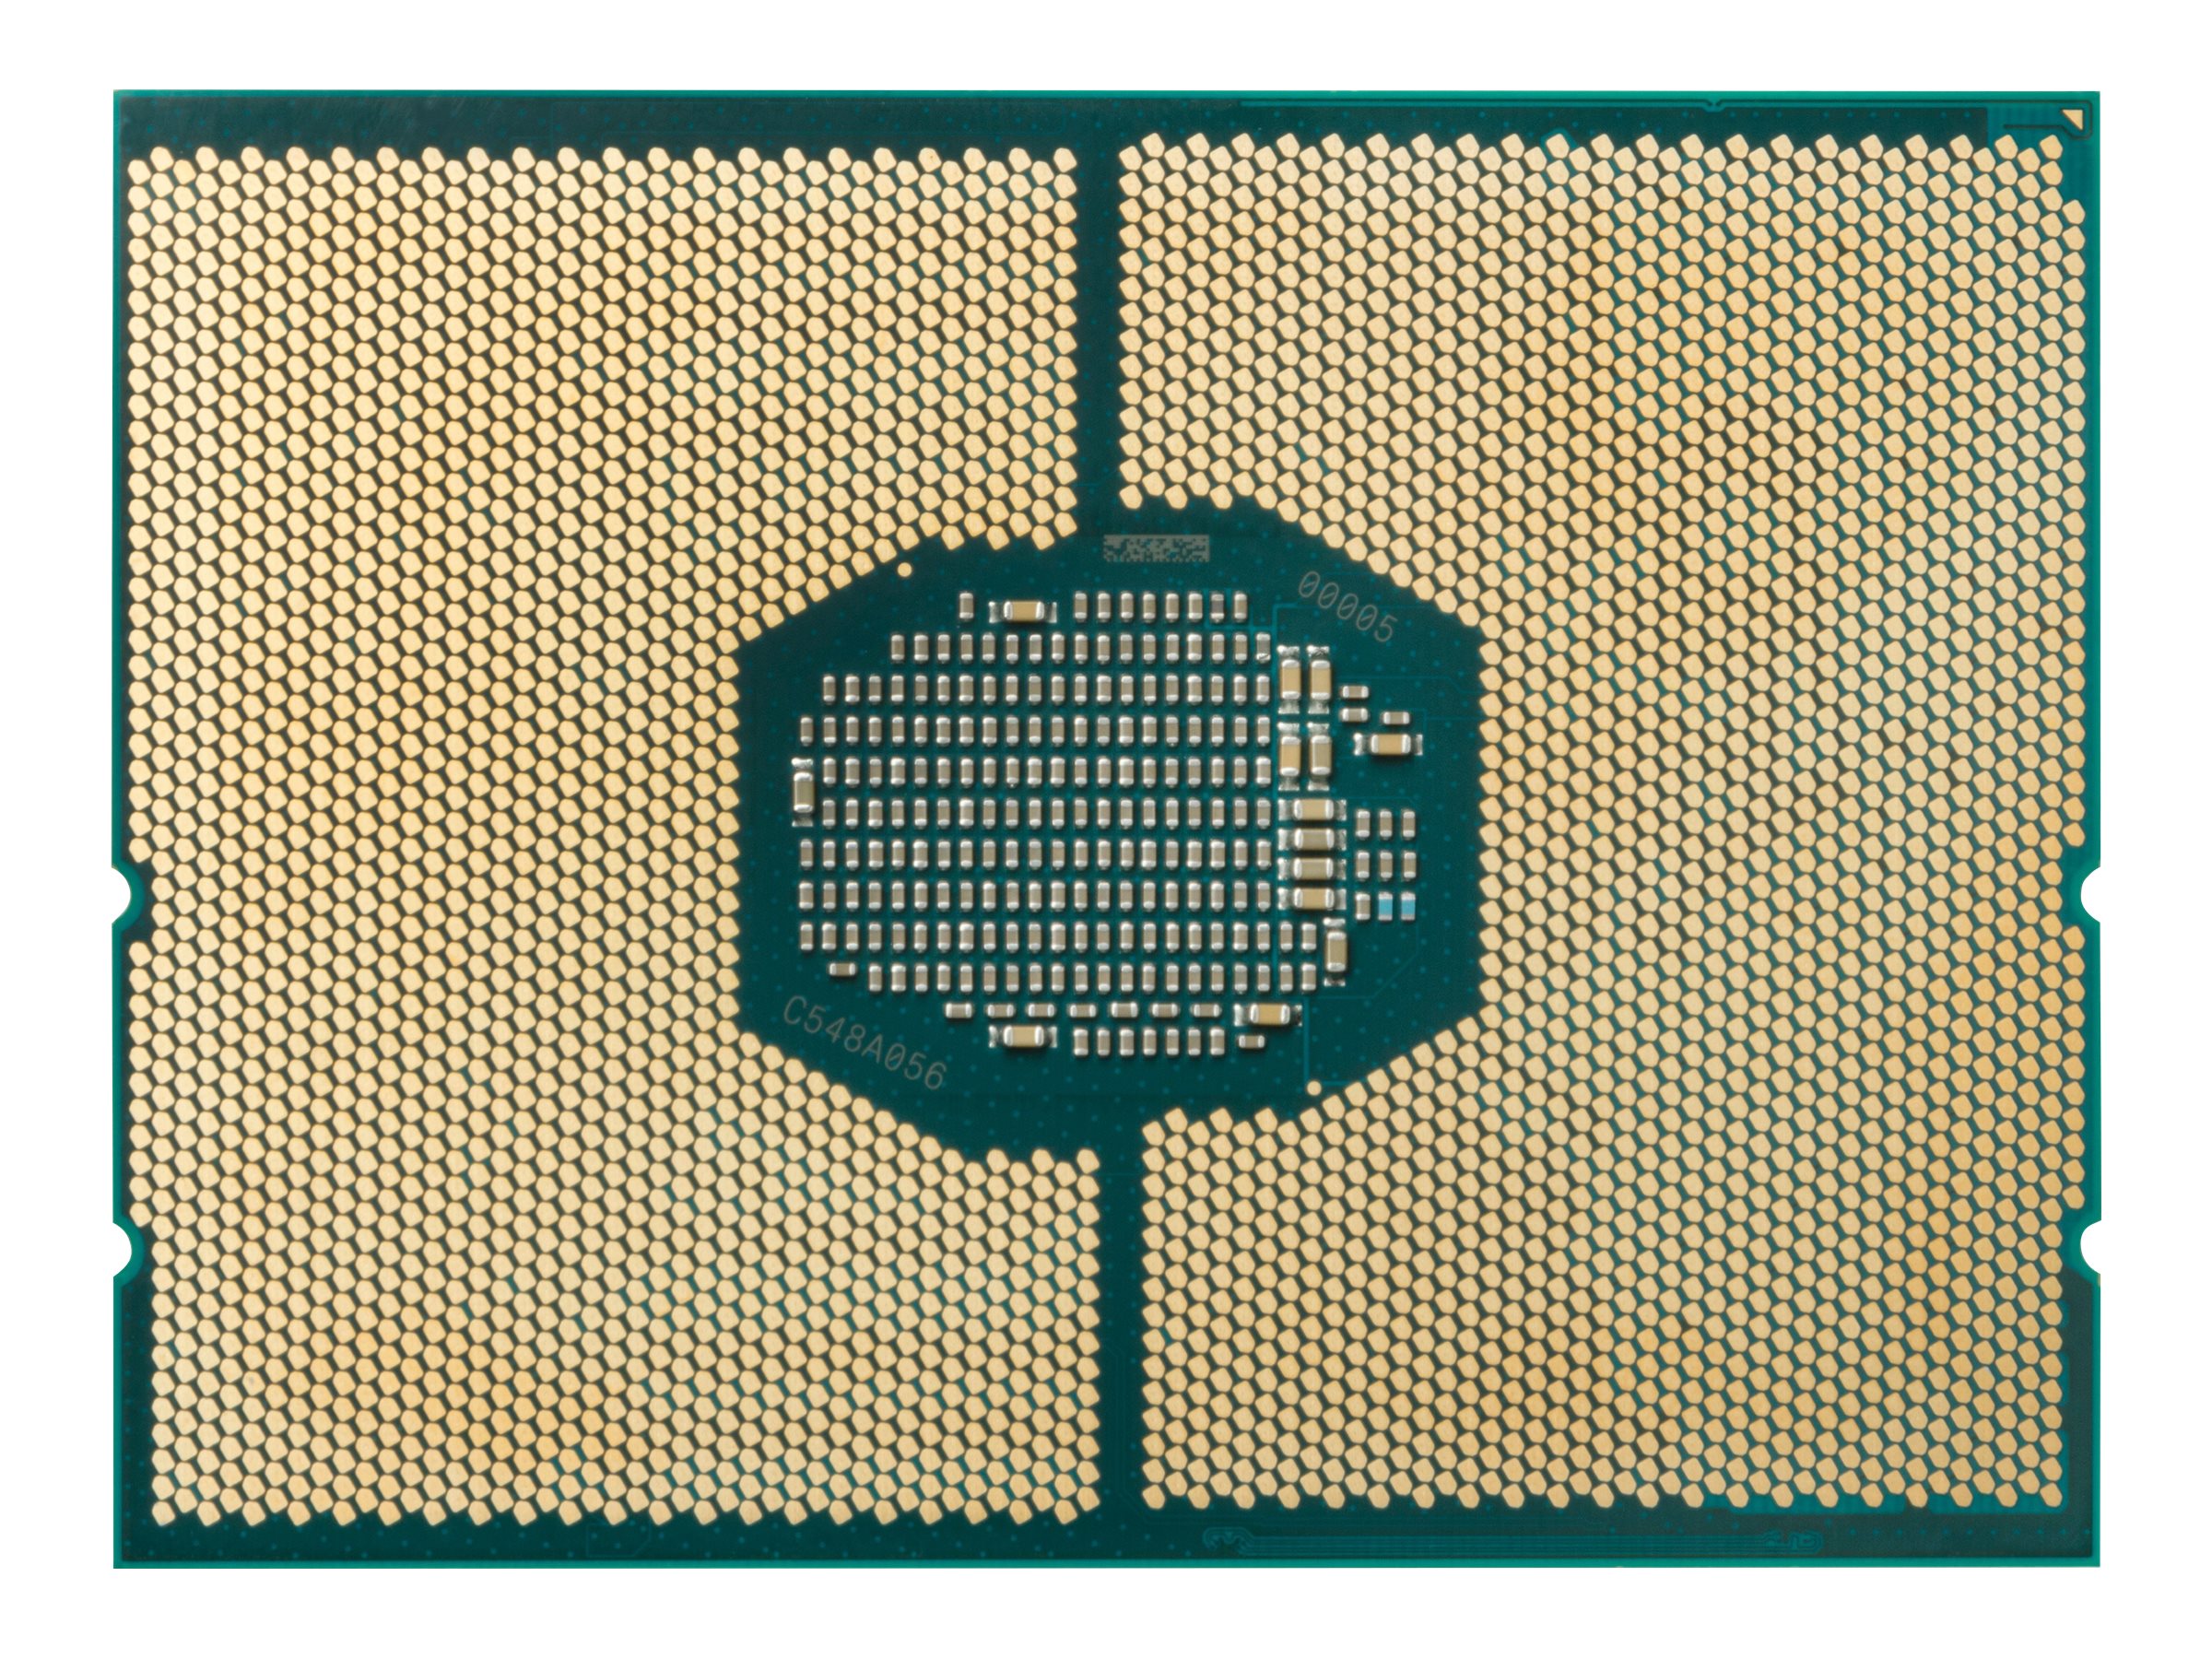 Intel Xeon Gold 6238R